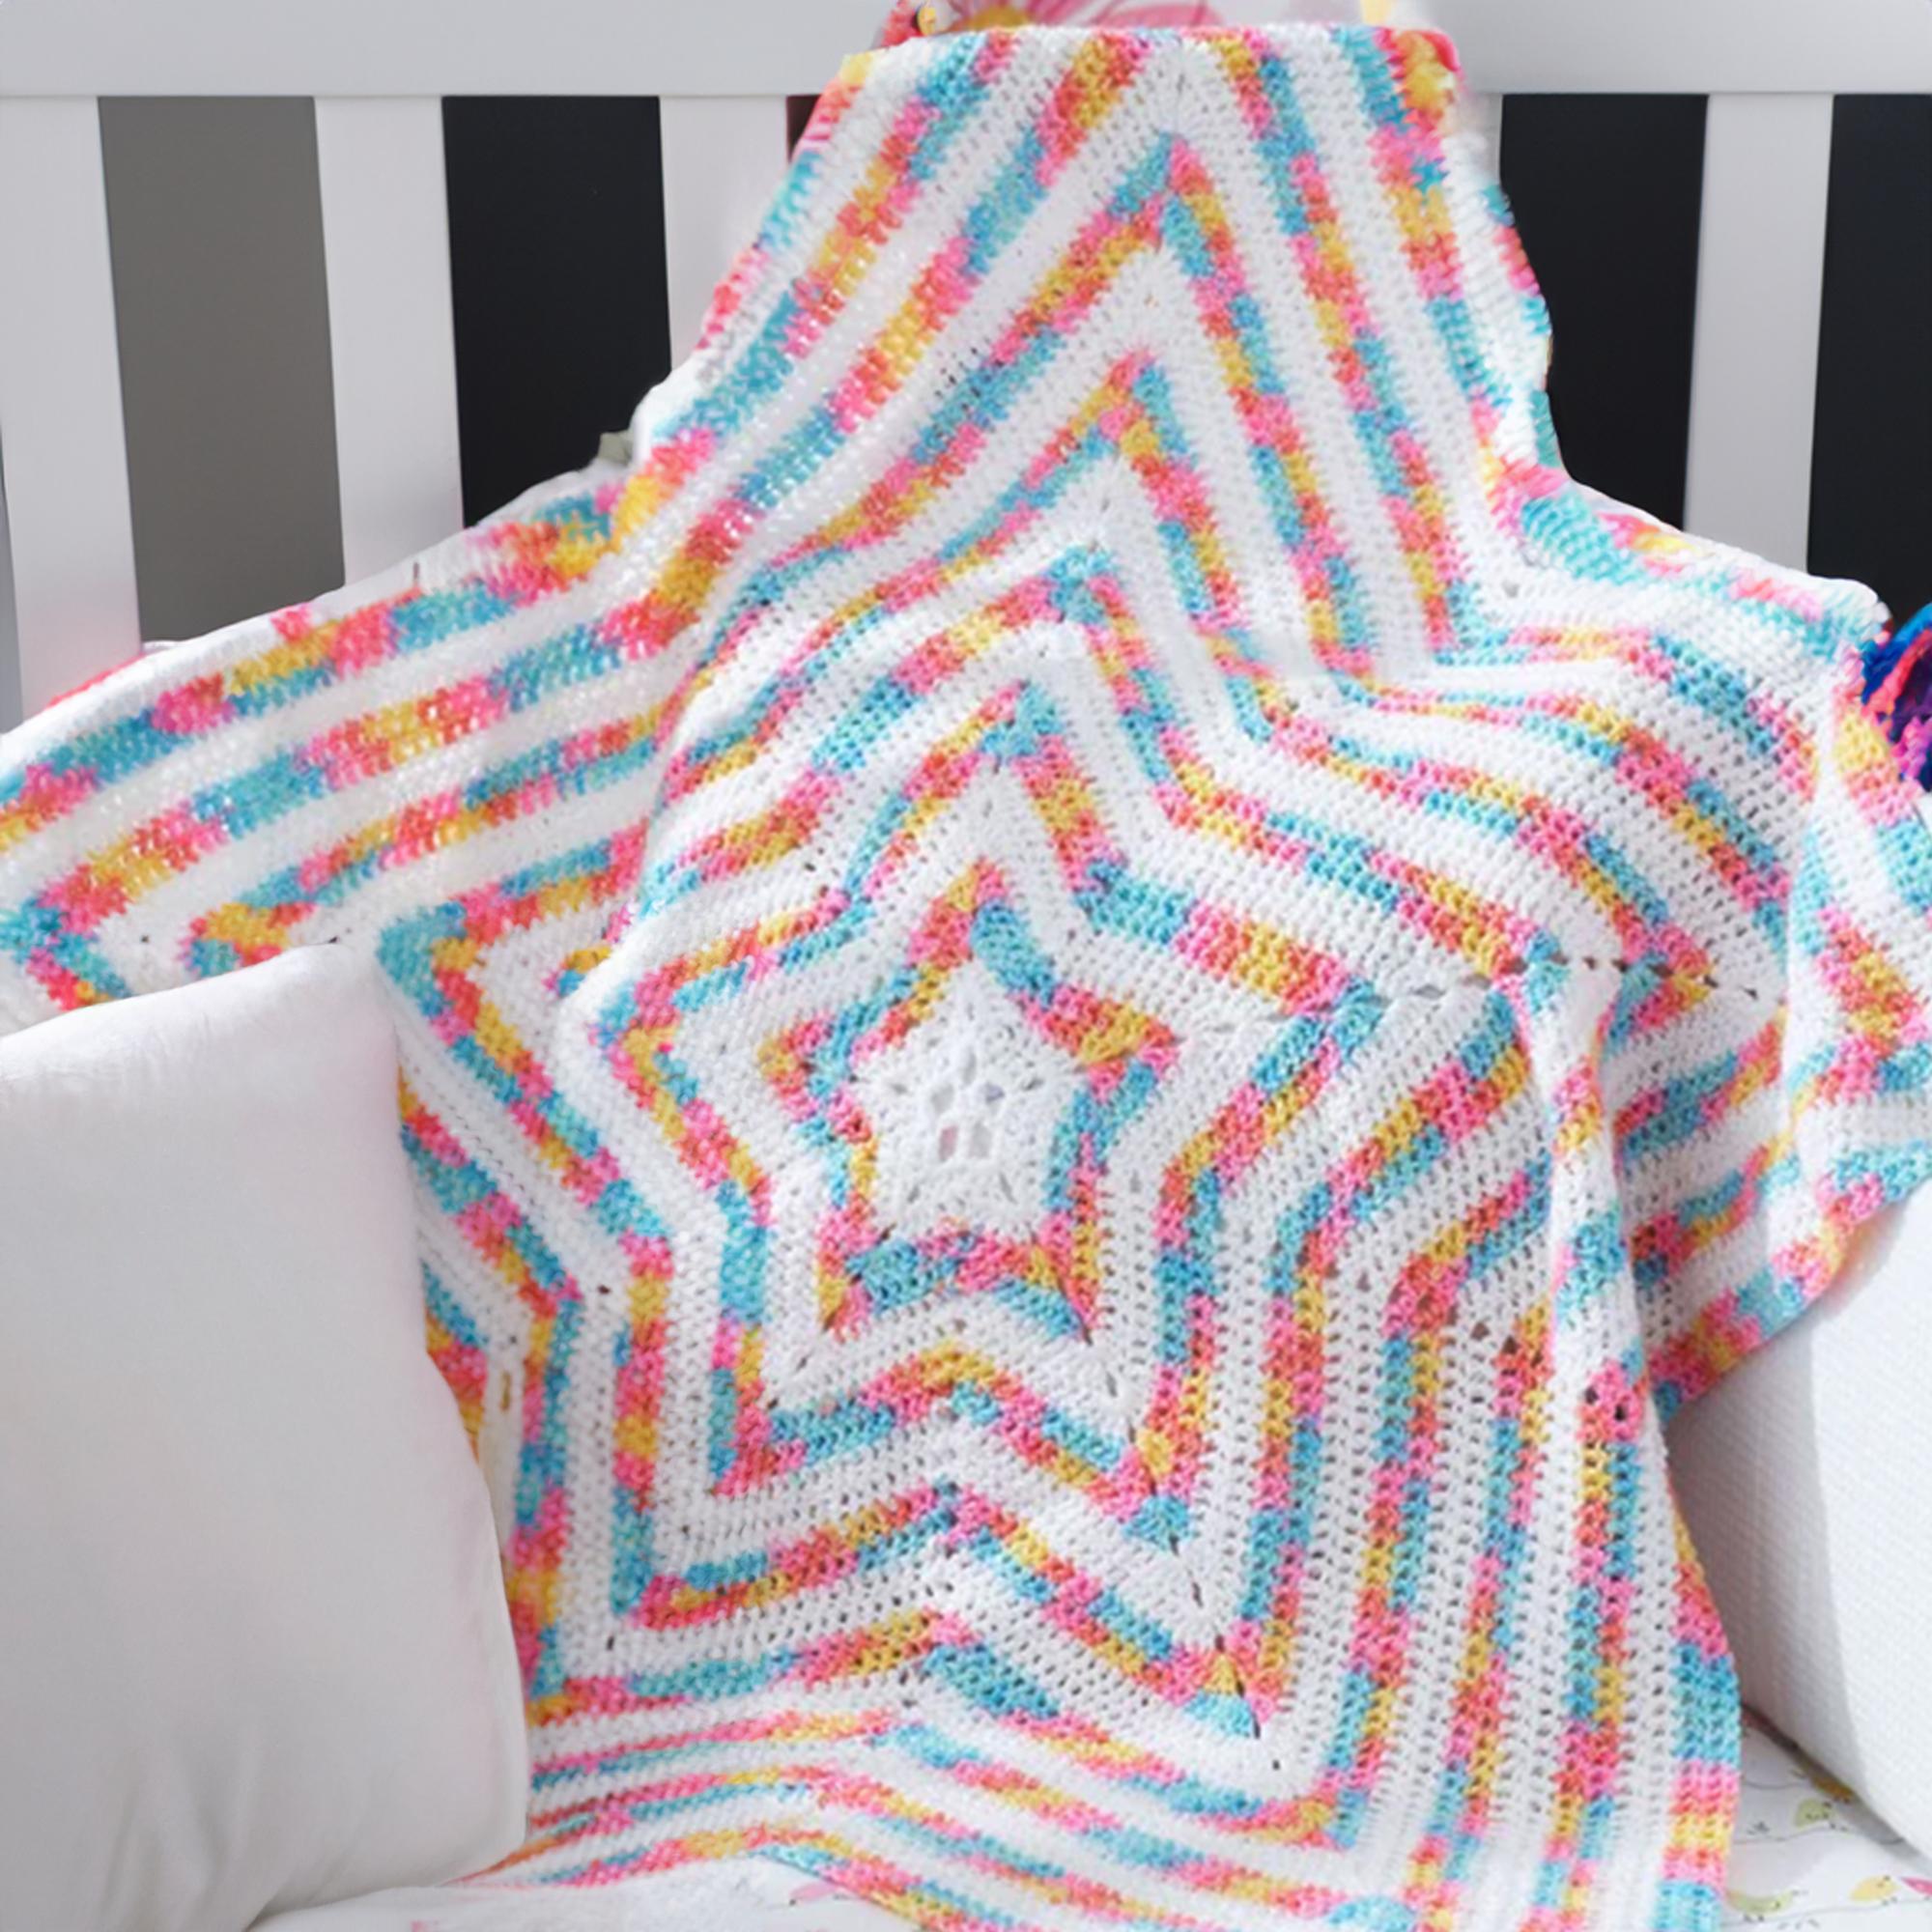 Starry Snuggle Blanket